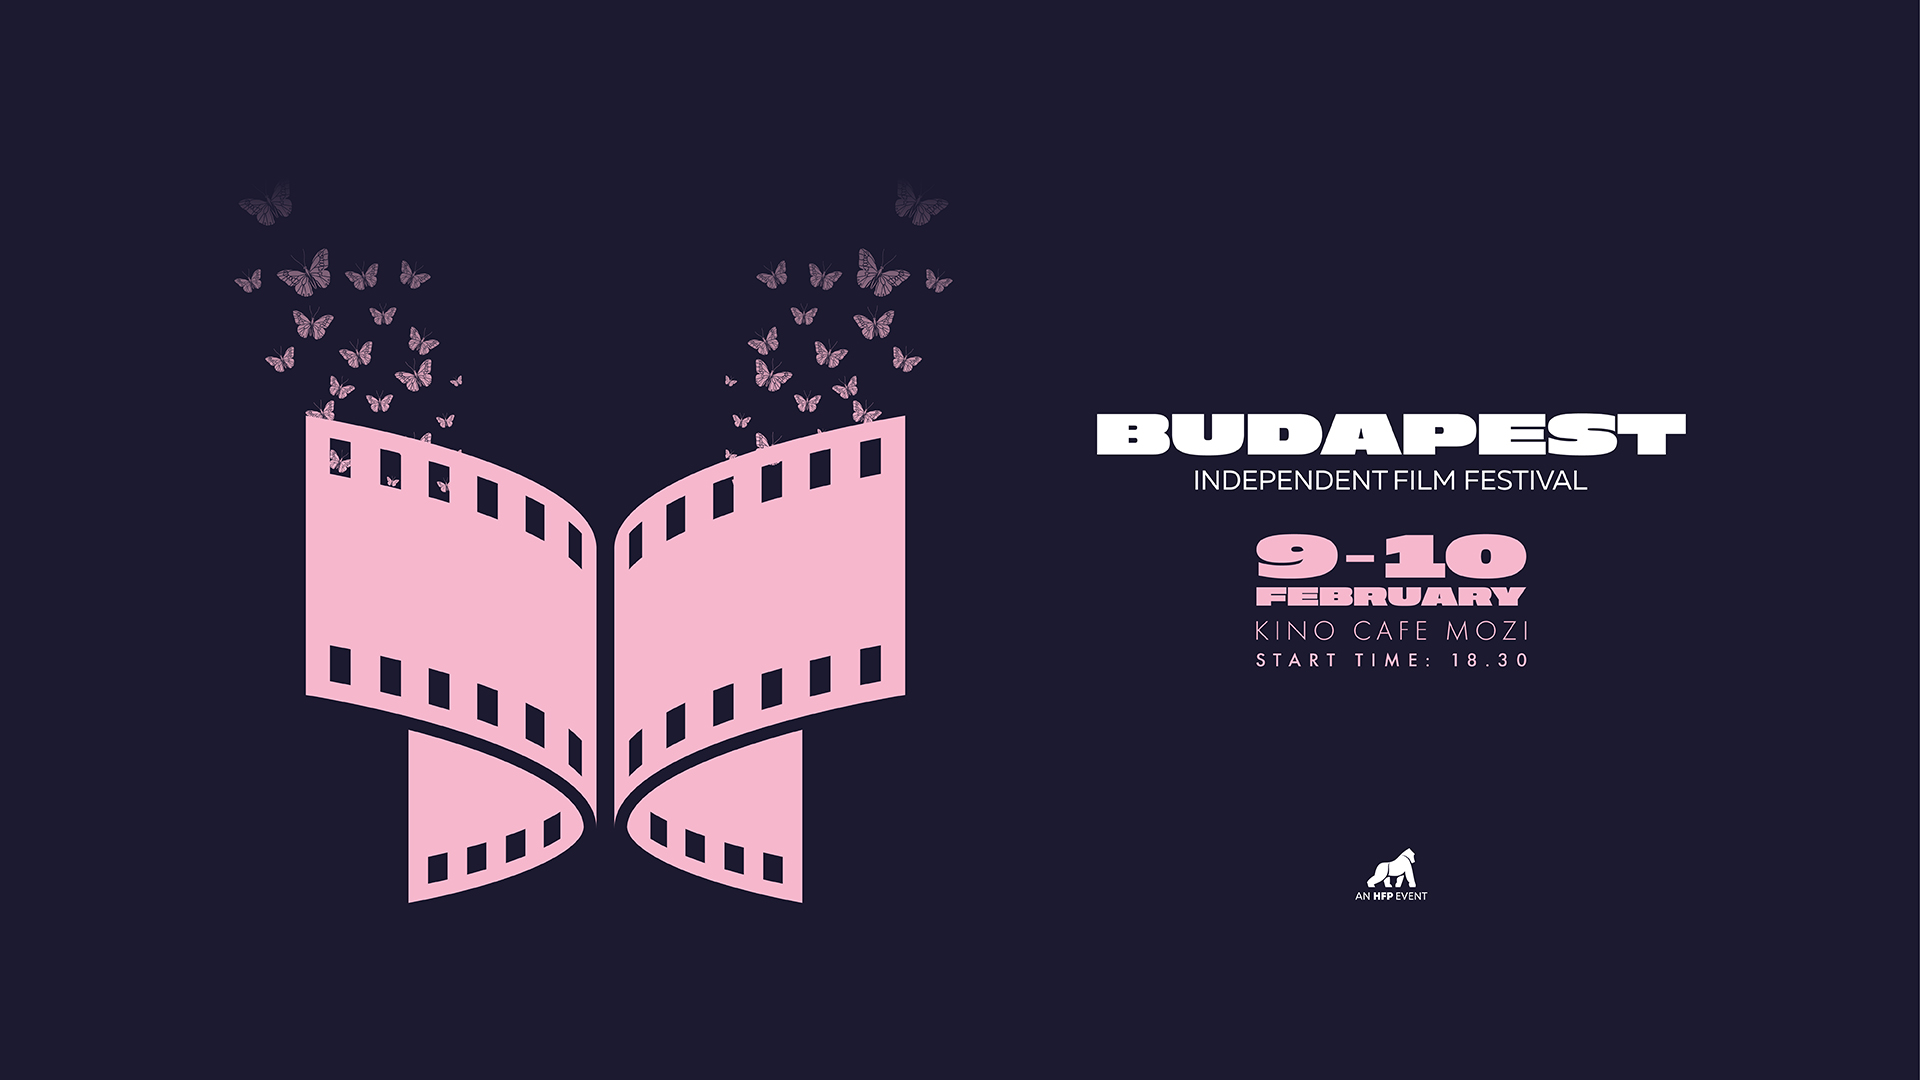 festival de cine independiente de budapest